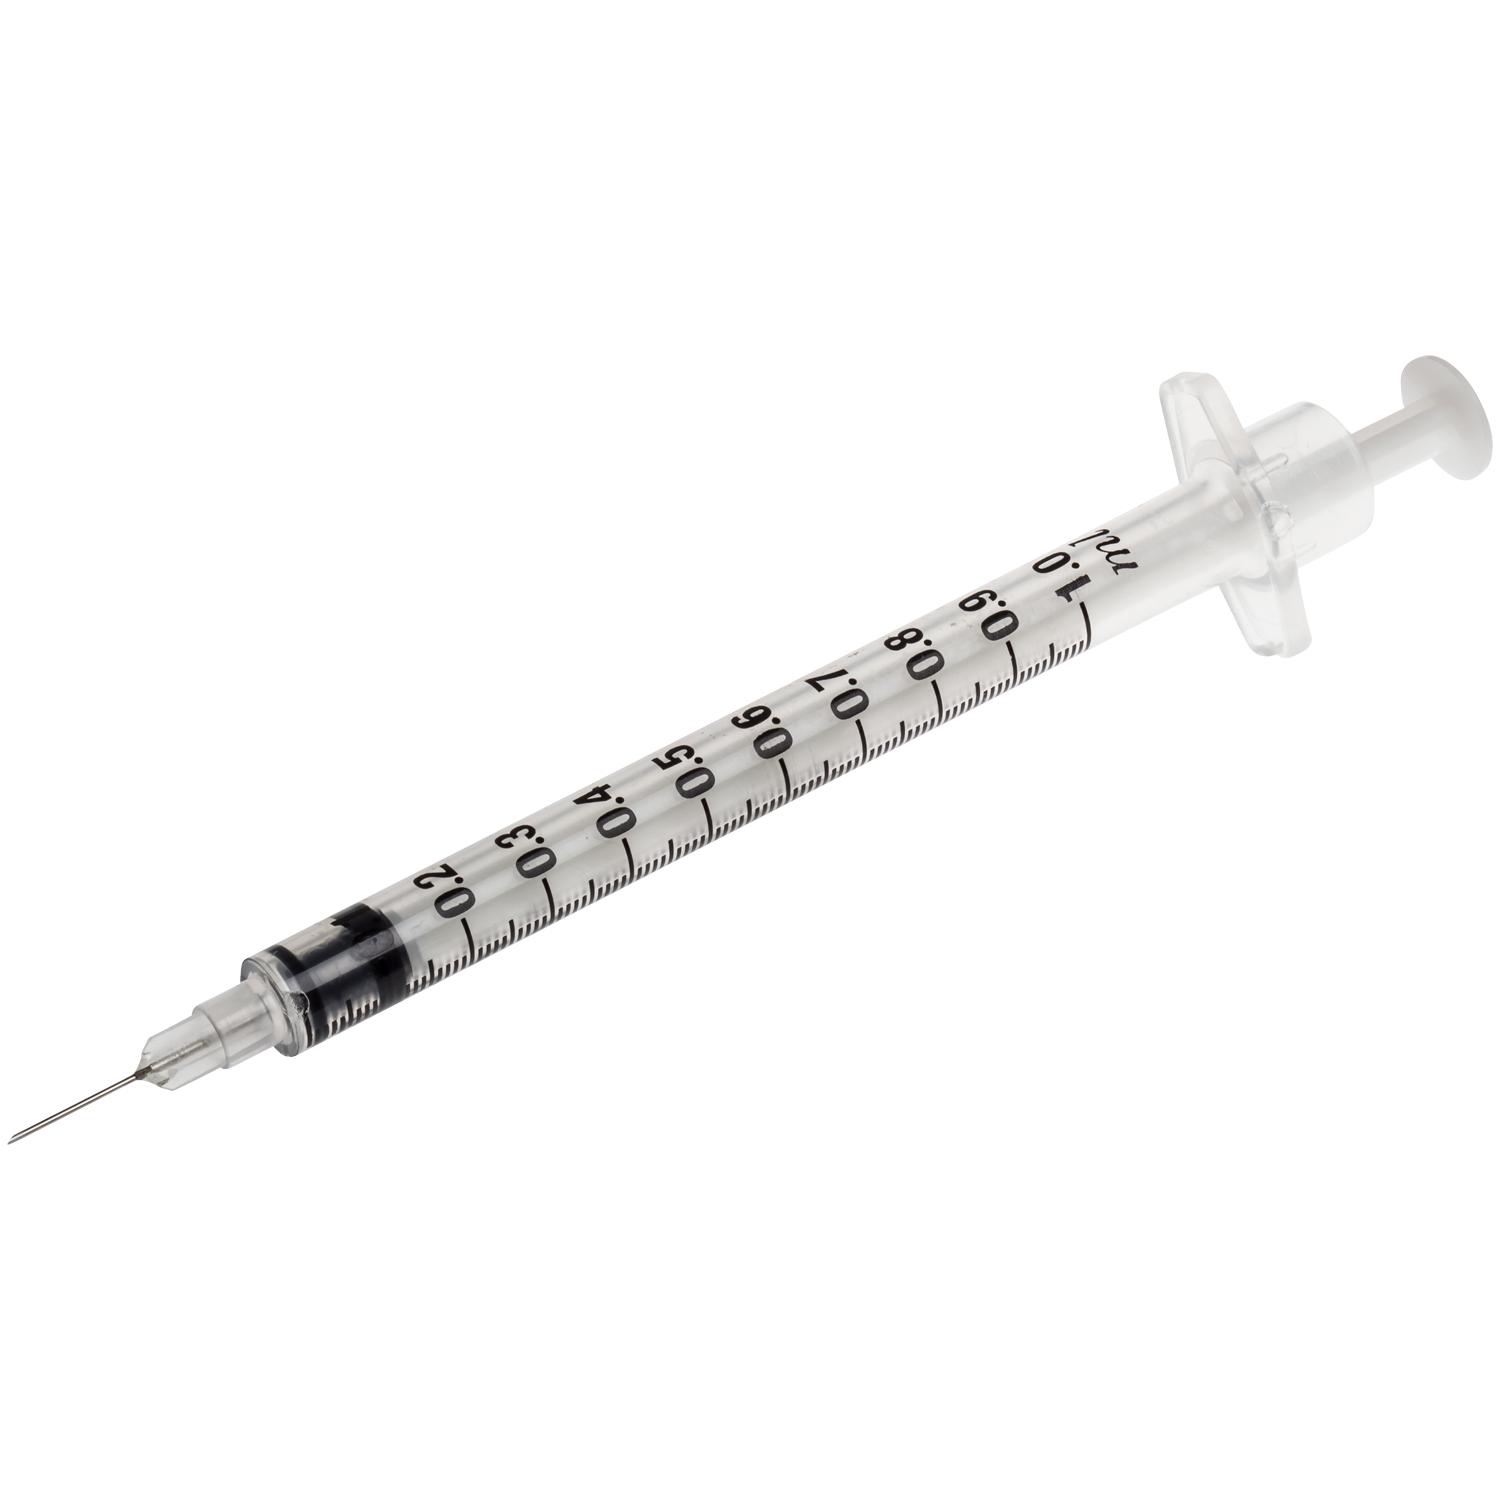 BD Plastipak™ 1 mL Syringe with detached BD Microlance™ 3 Needle - 305502